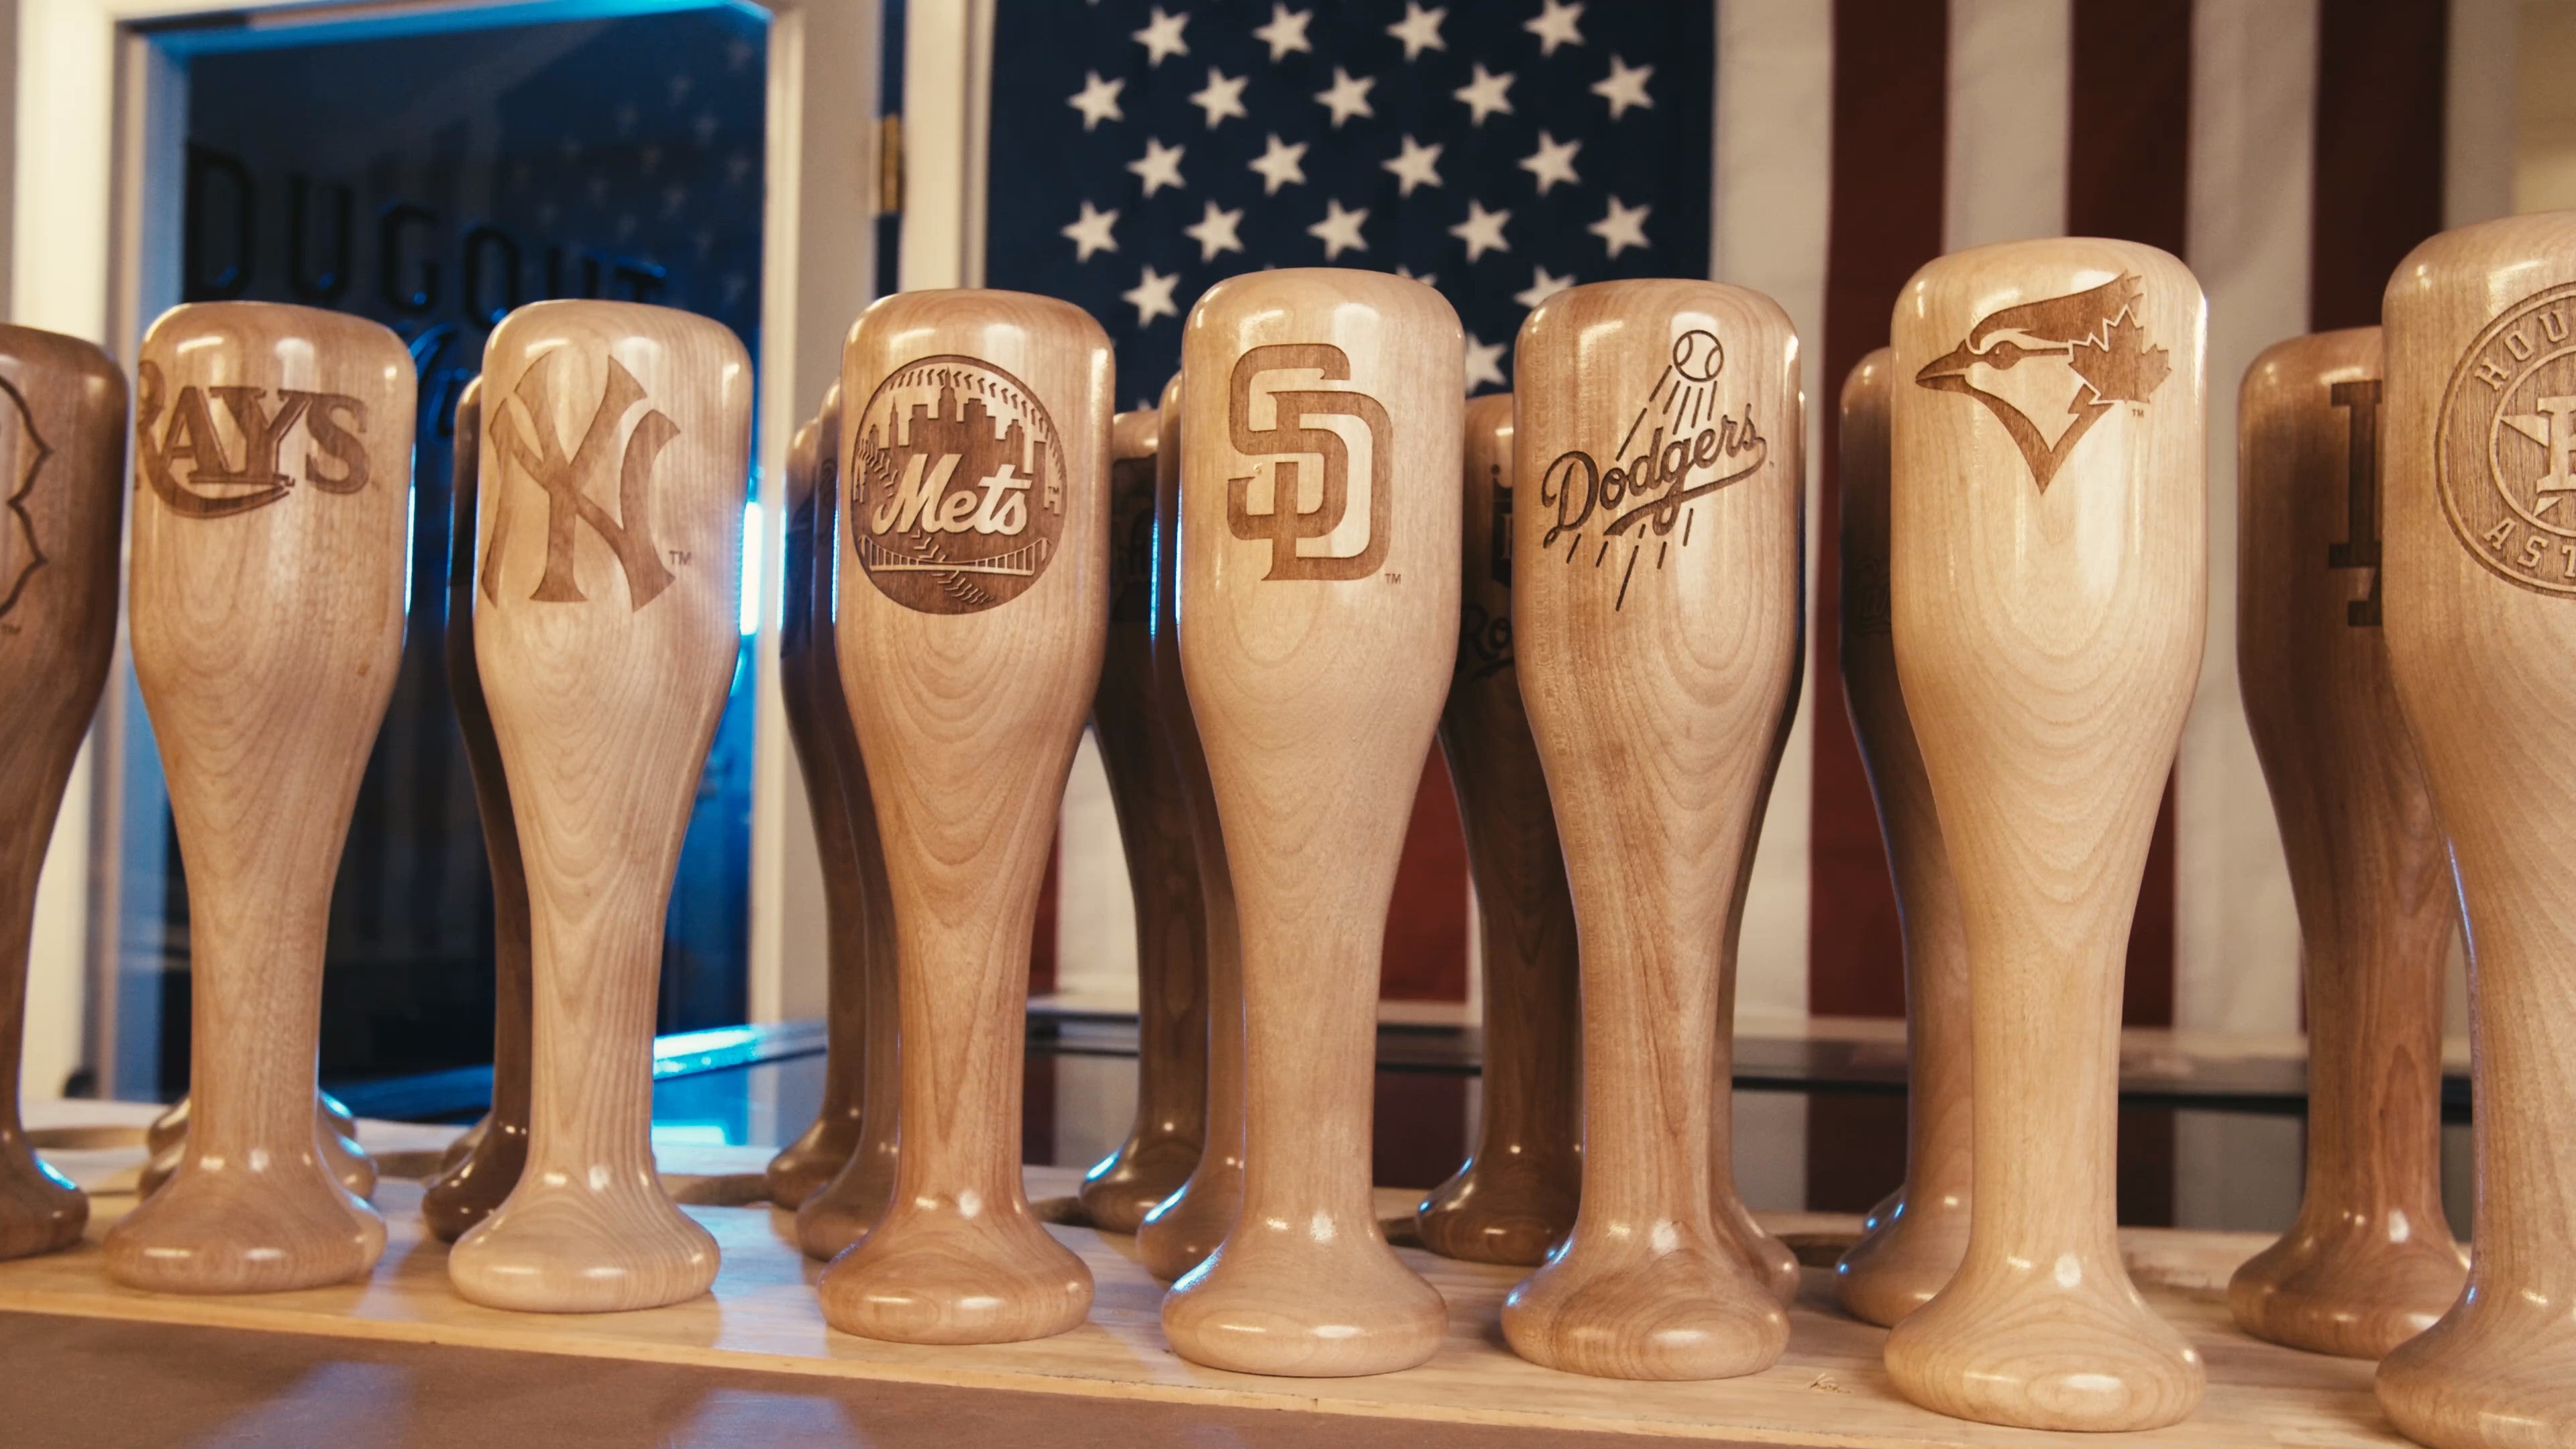 The 7 Original Wine Franchises of Major League Baseball